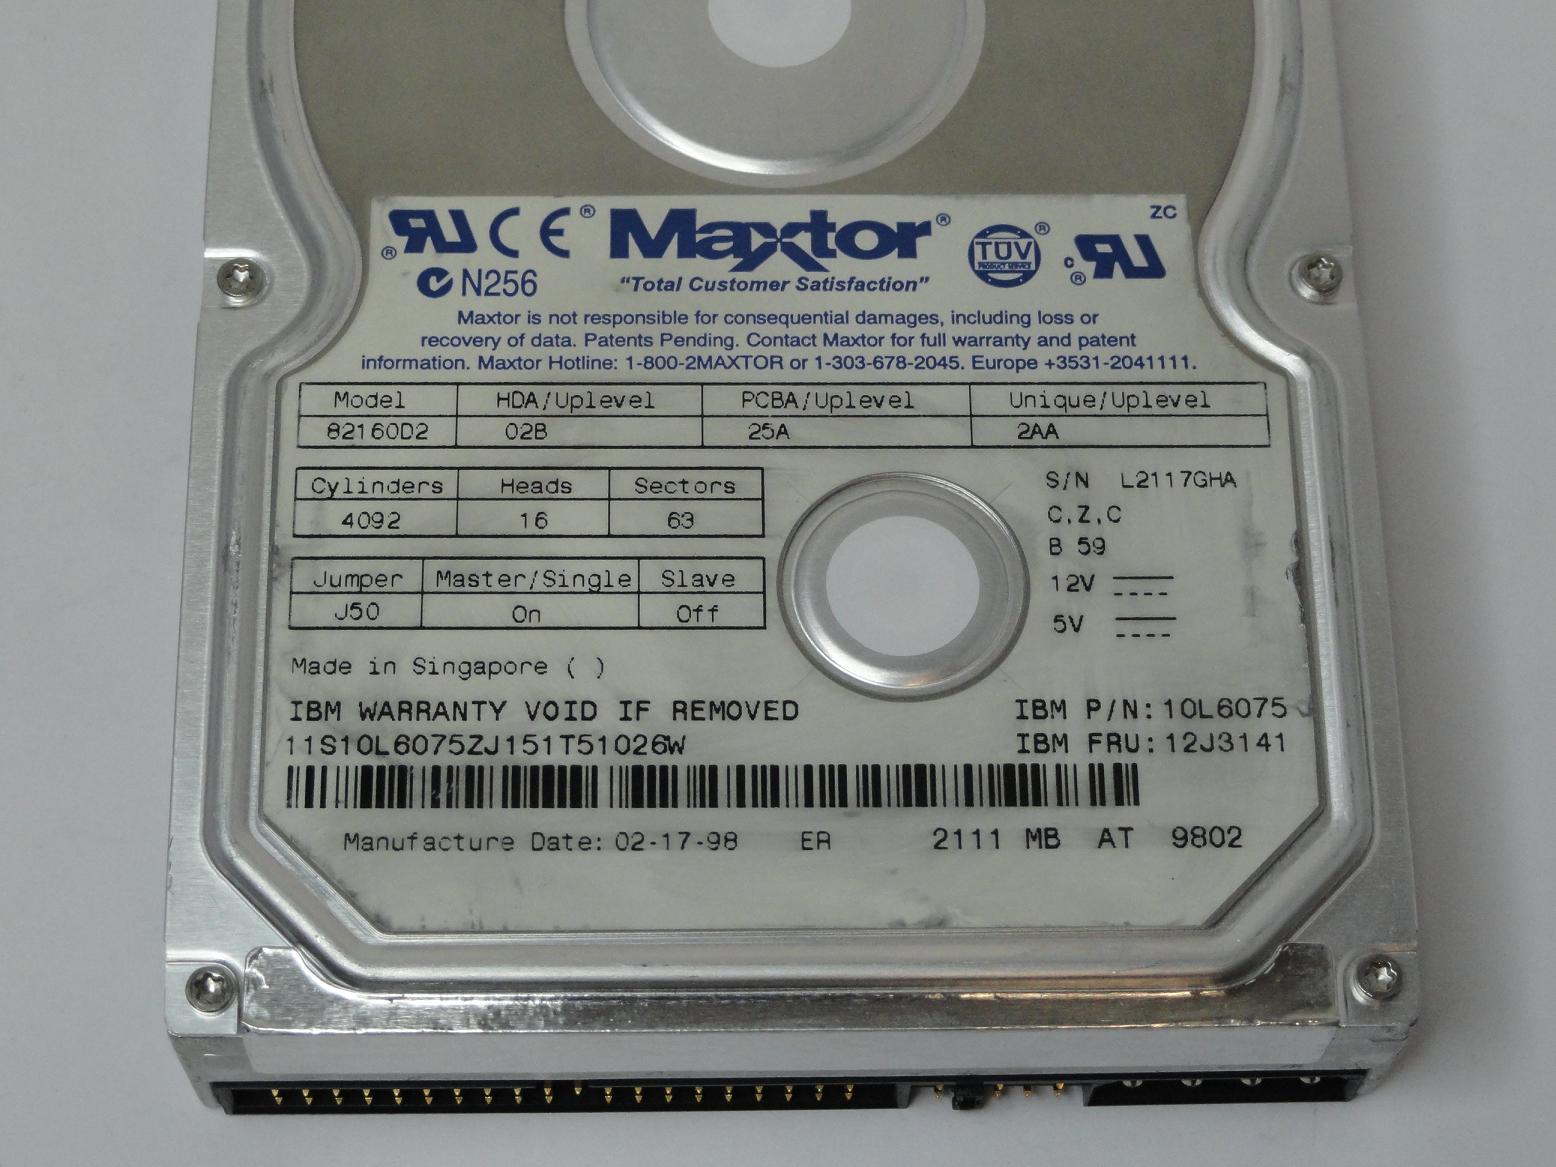 MC1917_82160D2_Maxtor IBM 2.1GB IDE 5200rpm 3.5in HDD - Image3